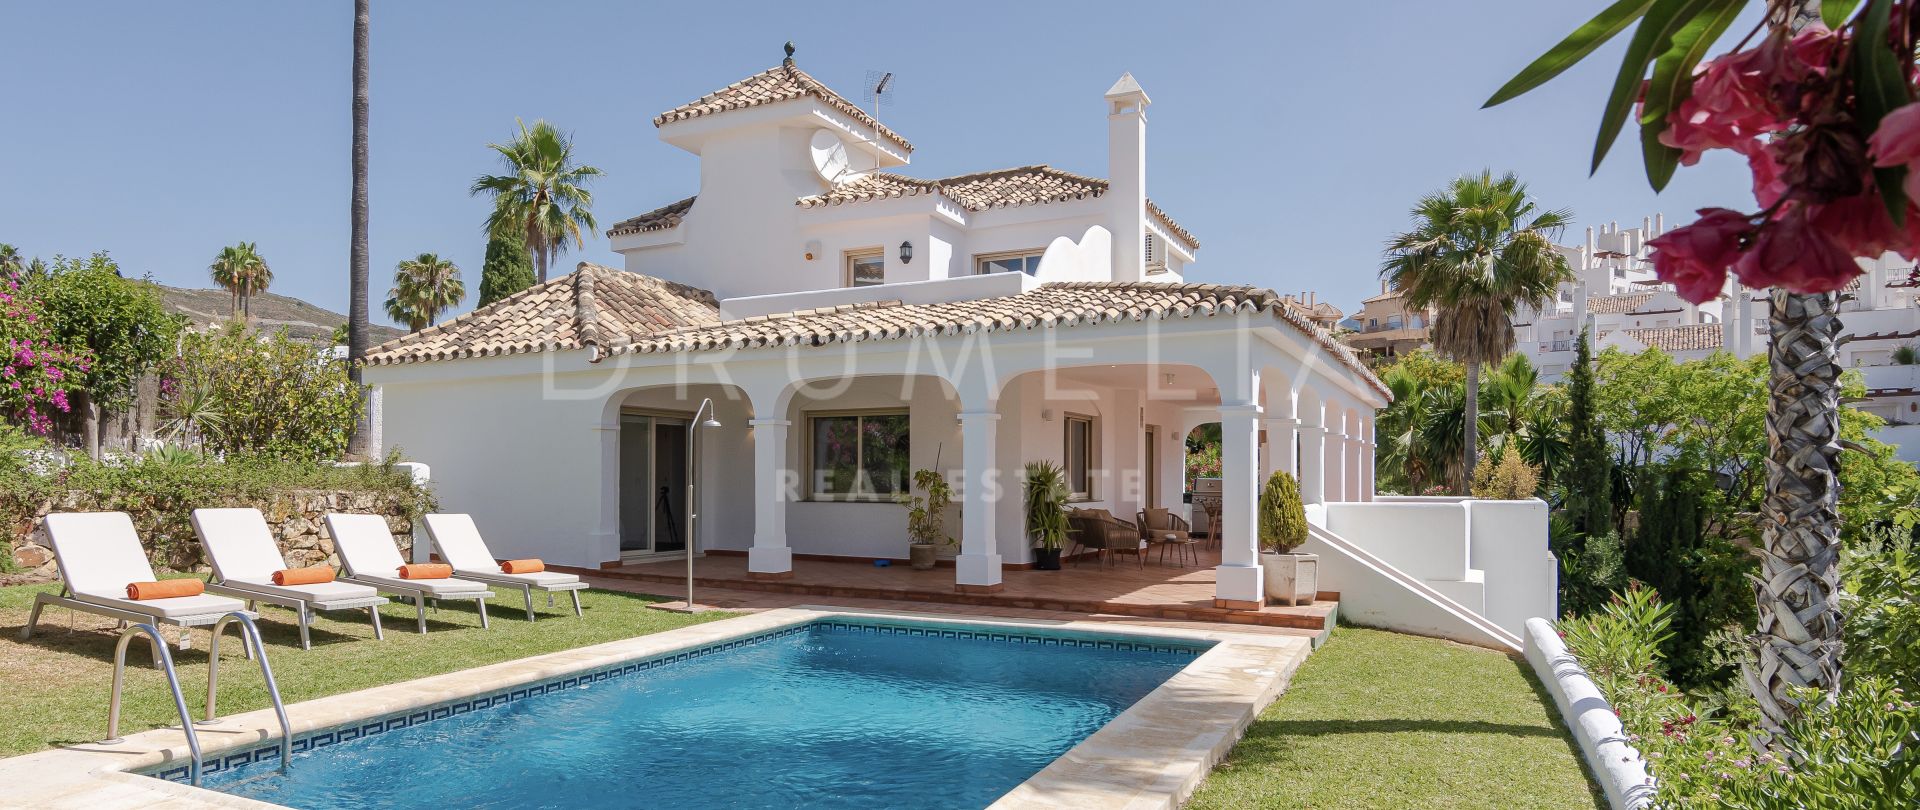 Charming luxury villa with great potential in Los Naranjos Hill Club, Nueva Andalucia, Marbella.